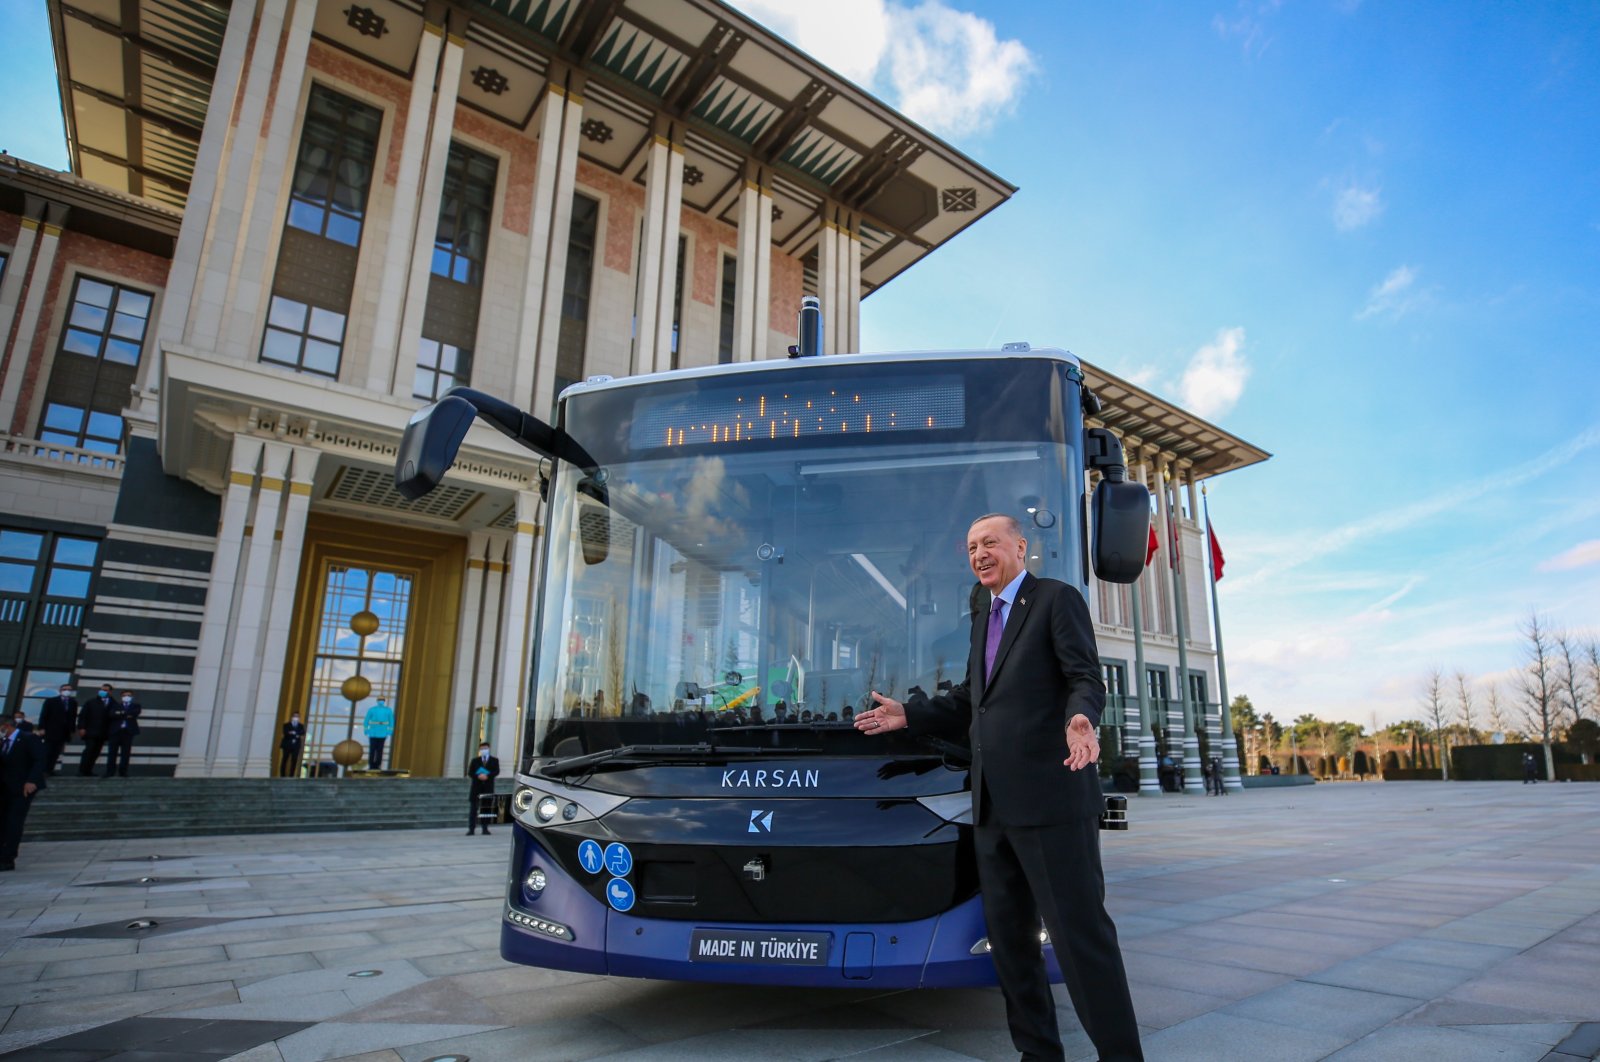 Turkey&#039;s first driverless electric bus is tested by President Recep Tayyip Erdoğan in the Beştepe Presidential Complex in the capital Ankara, Turkey, Feb. 1, 2021. (IHA Photo)